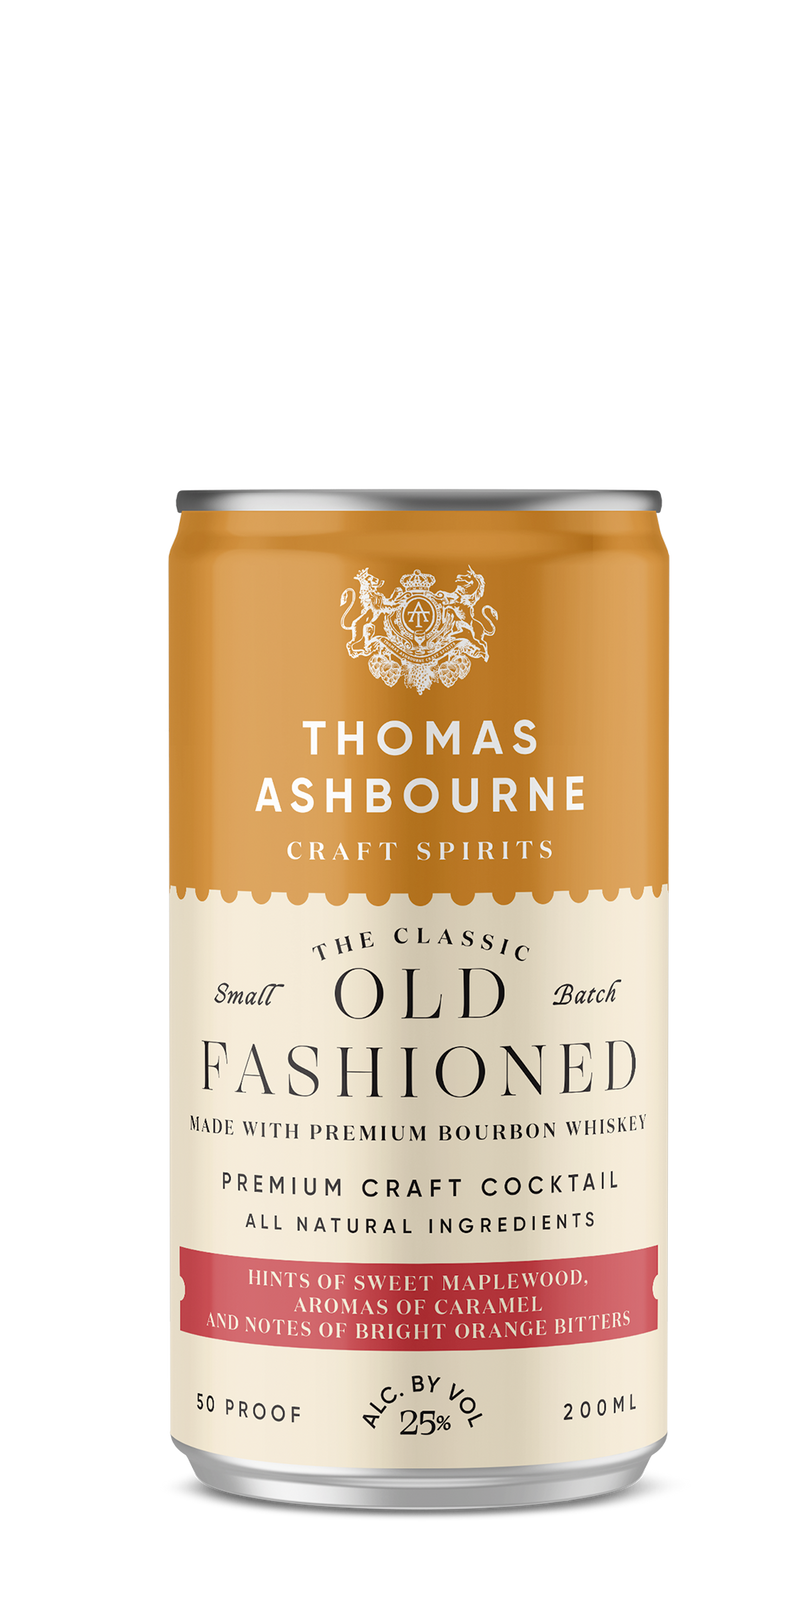 The Old Fashioned – Thomas Ashbourne